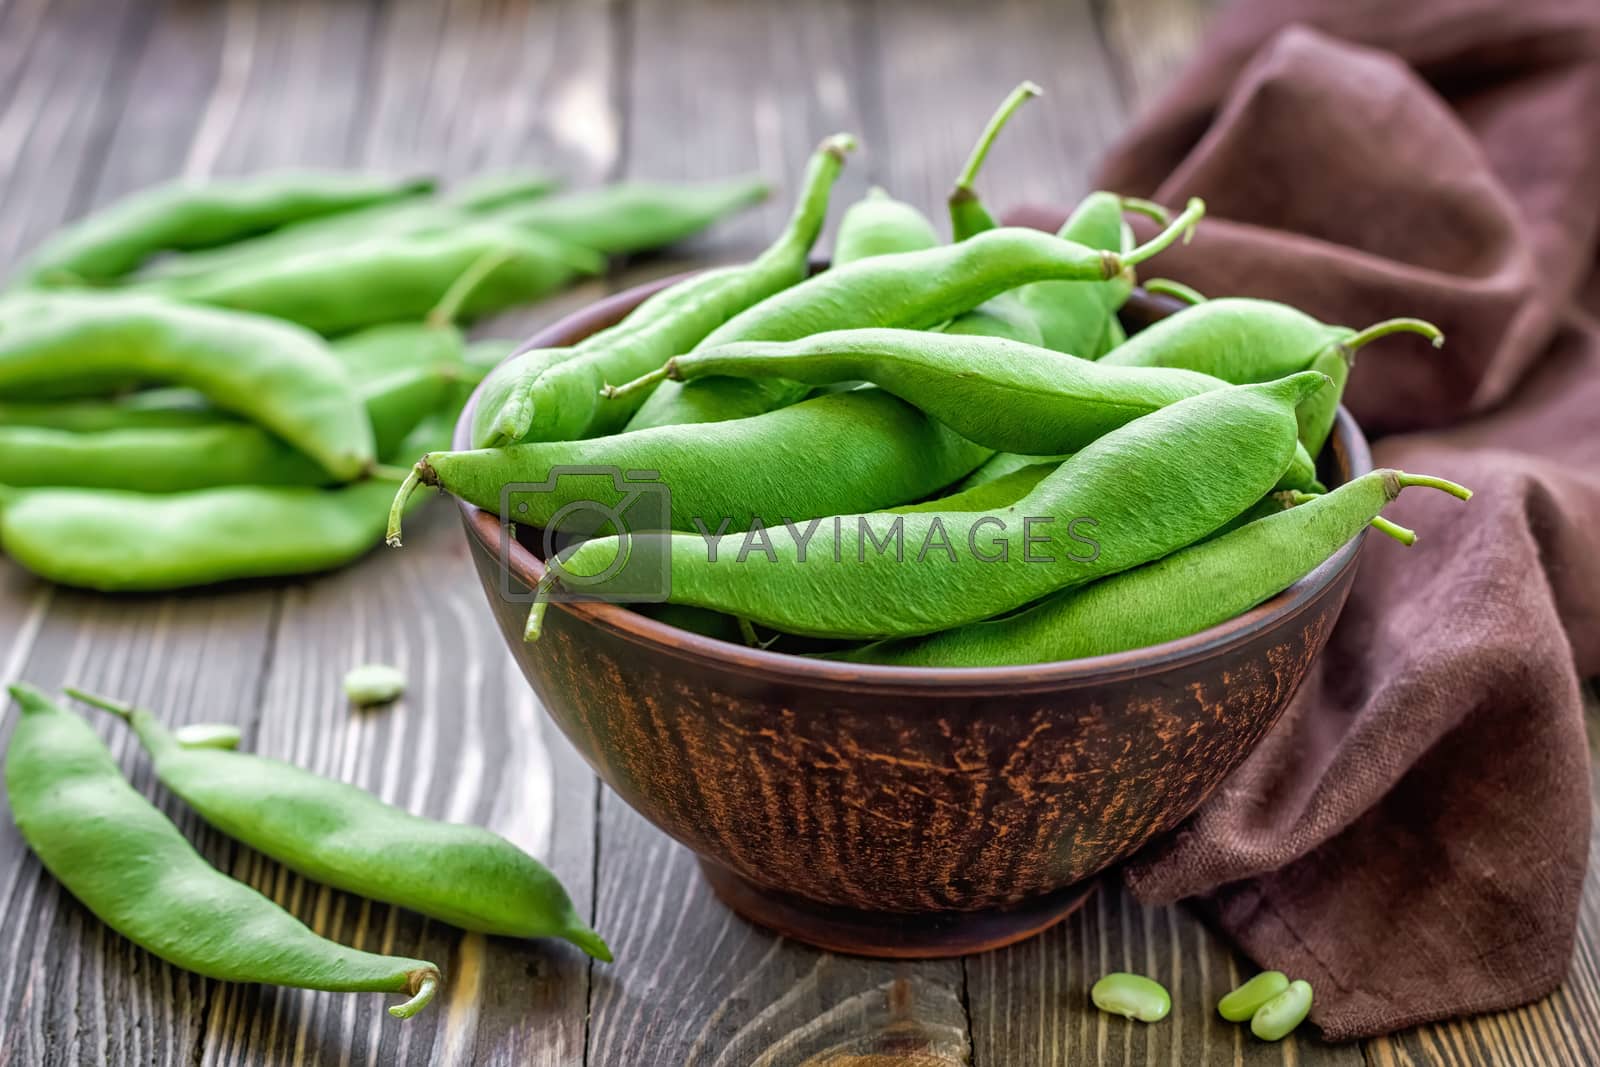 Royalty free image of Green beans by yelenayemchuk